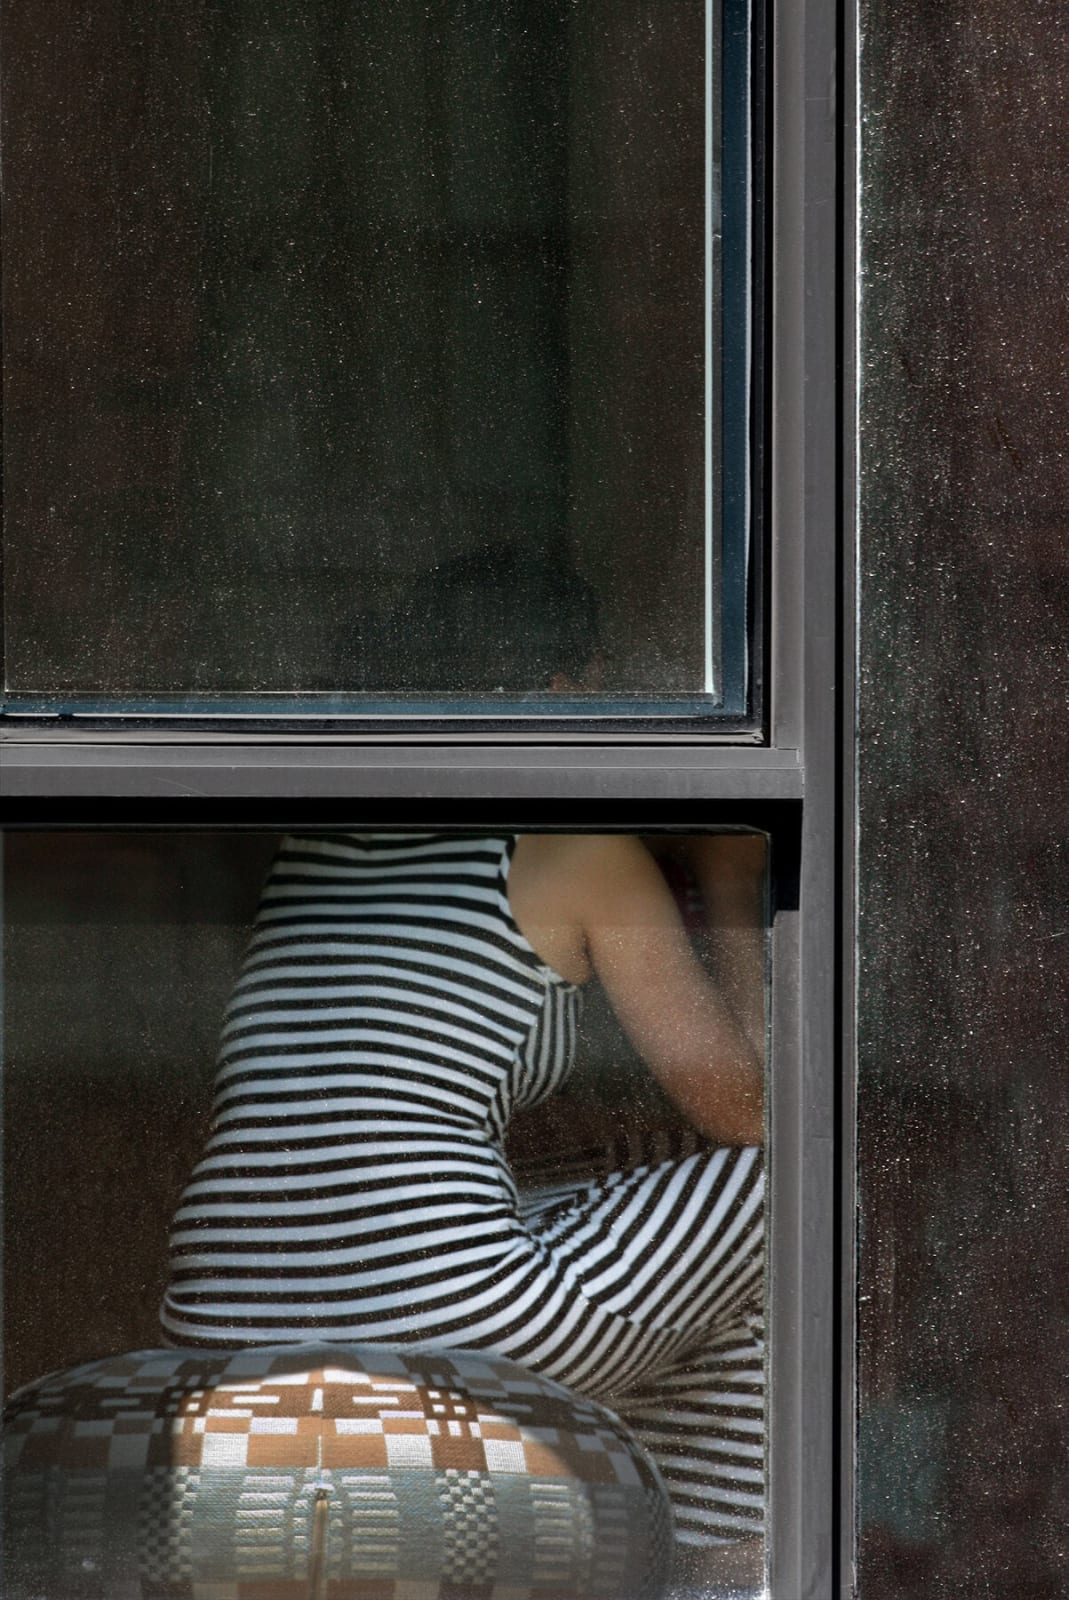 Arne Svenson, Neighbors #67, 2012